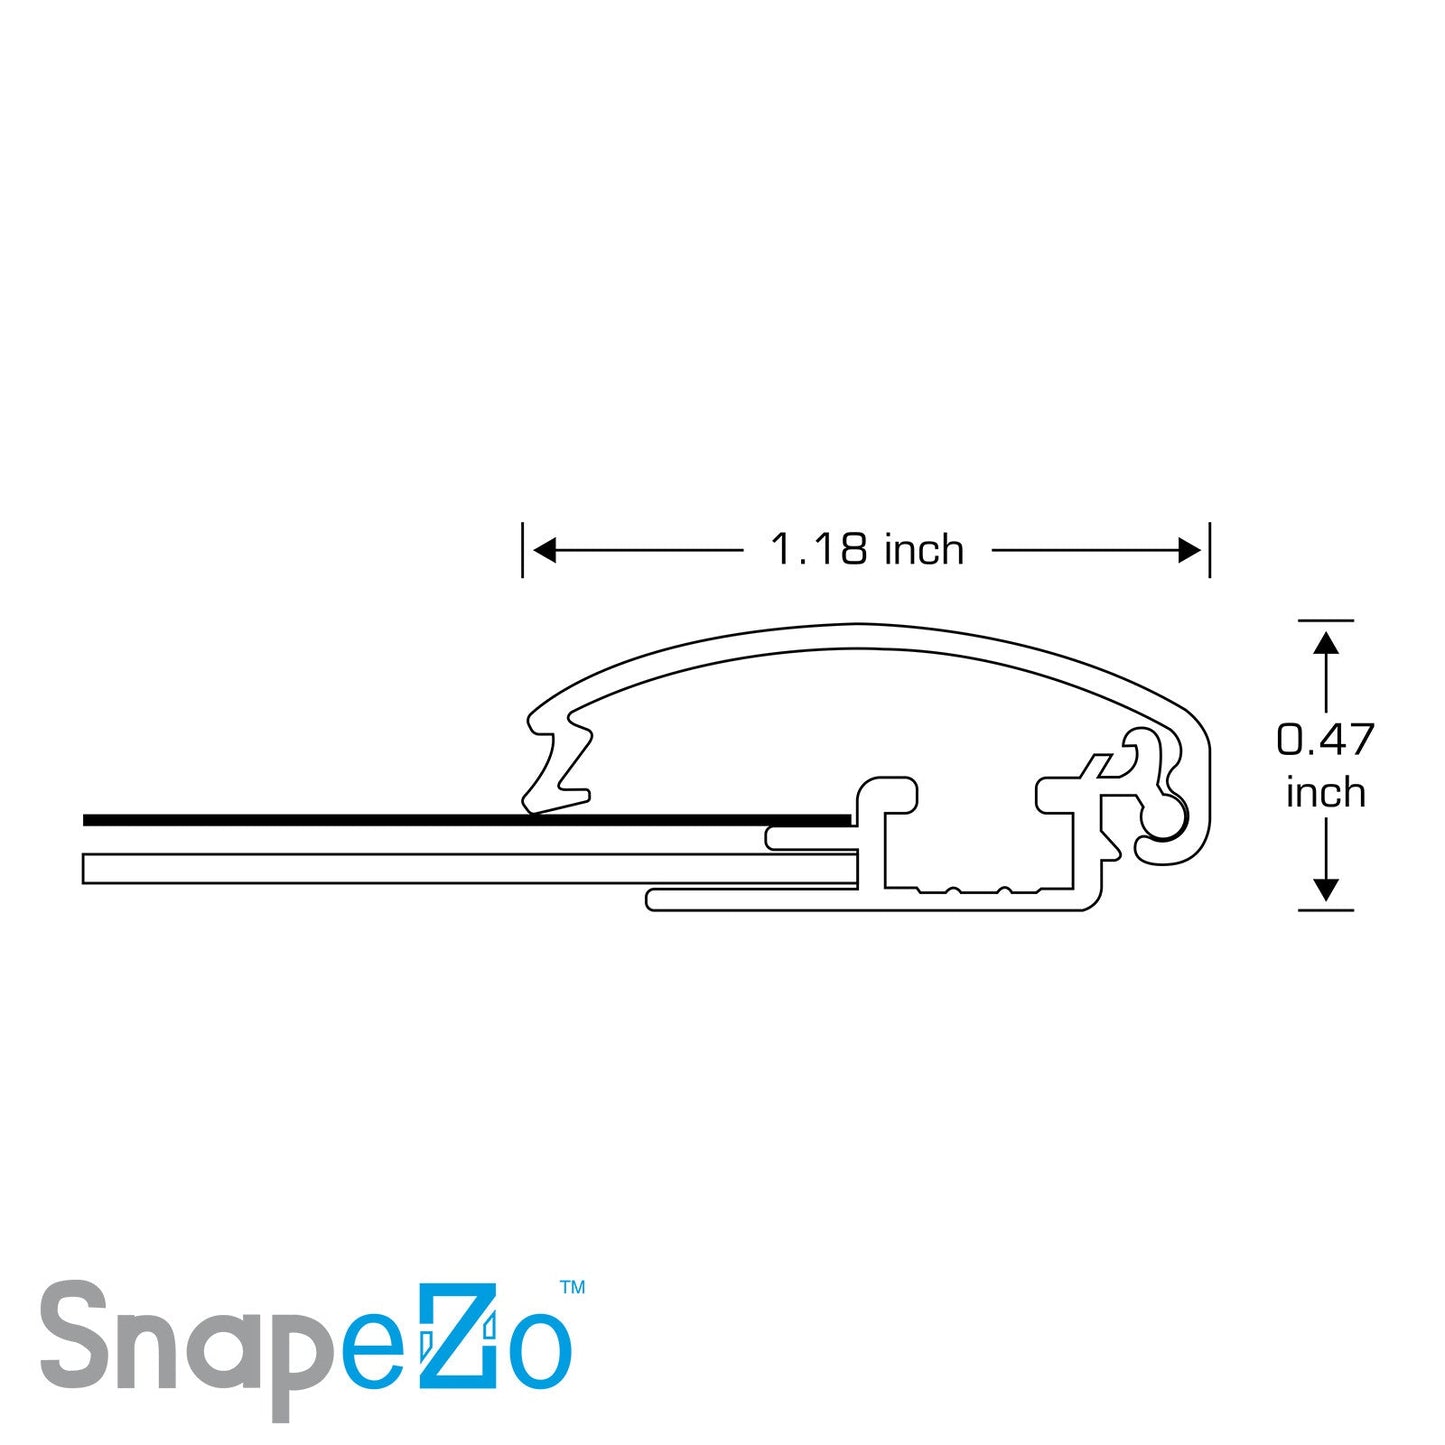 12x16 Blue SnapeZo® Snap Frame - 1.2" Profile